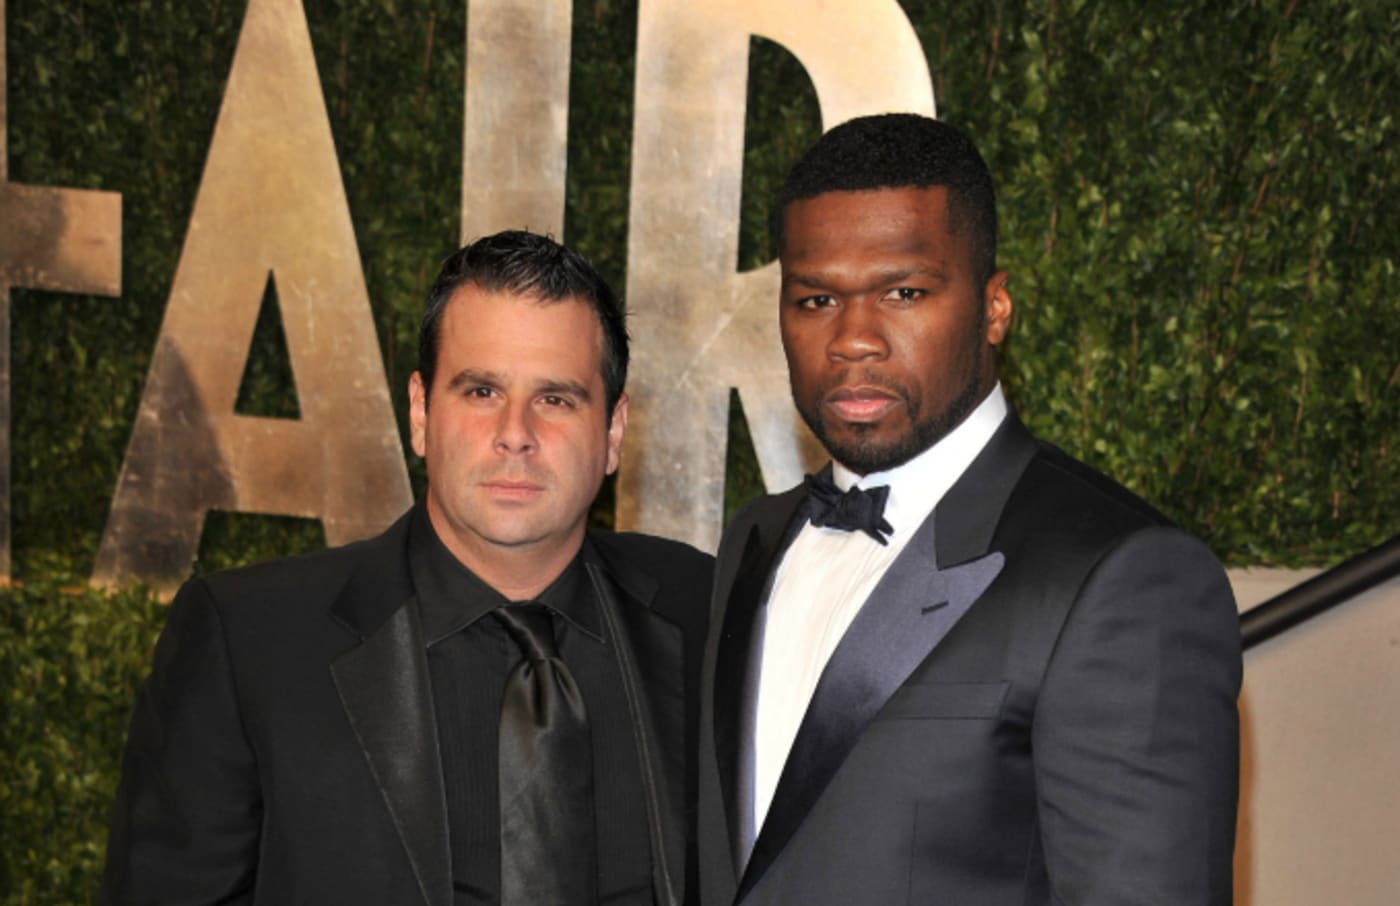 Randall Emmett and Curtis '50 Cent' Jackson arrive at the Vanity Fair Oscar party